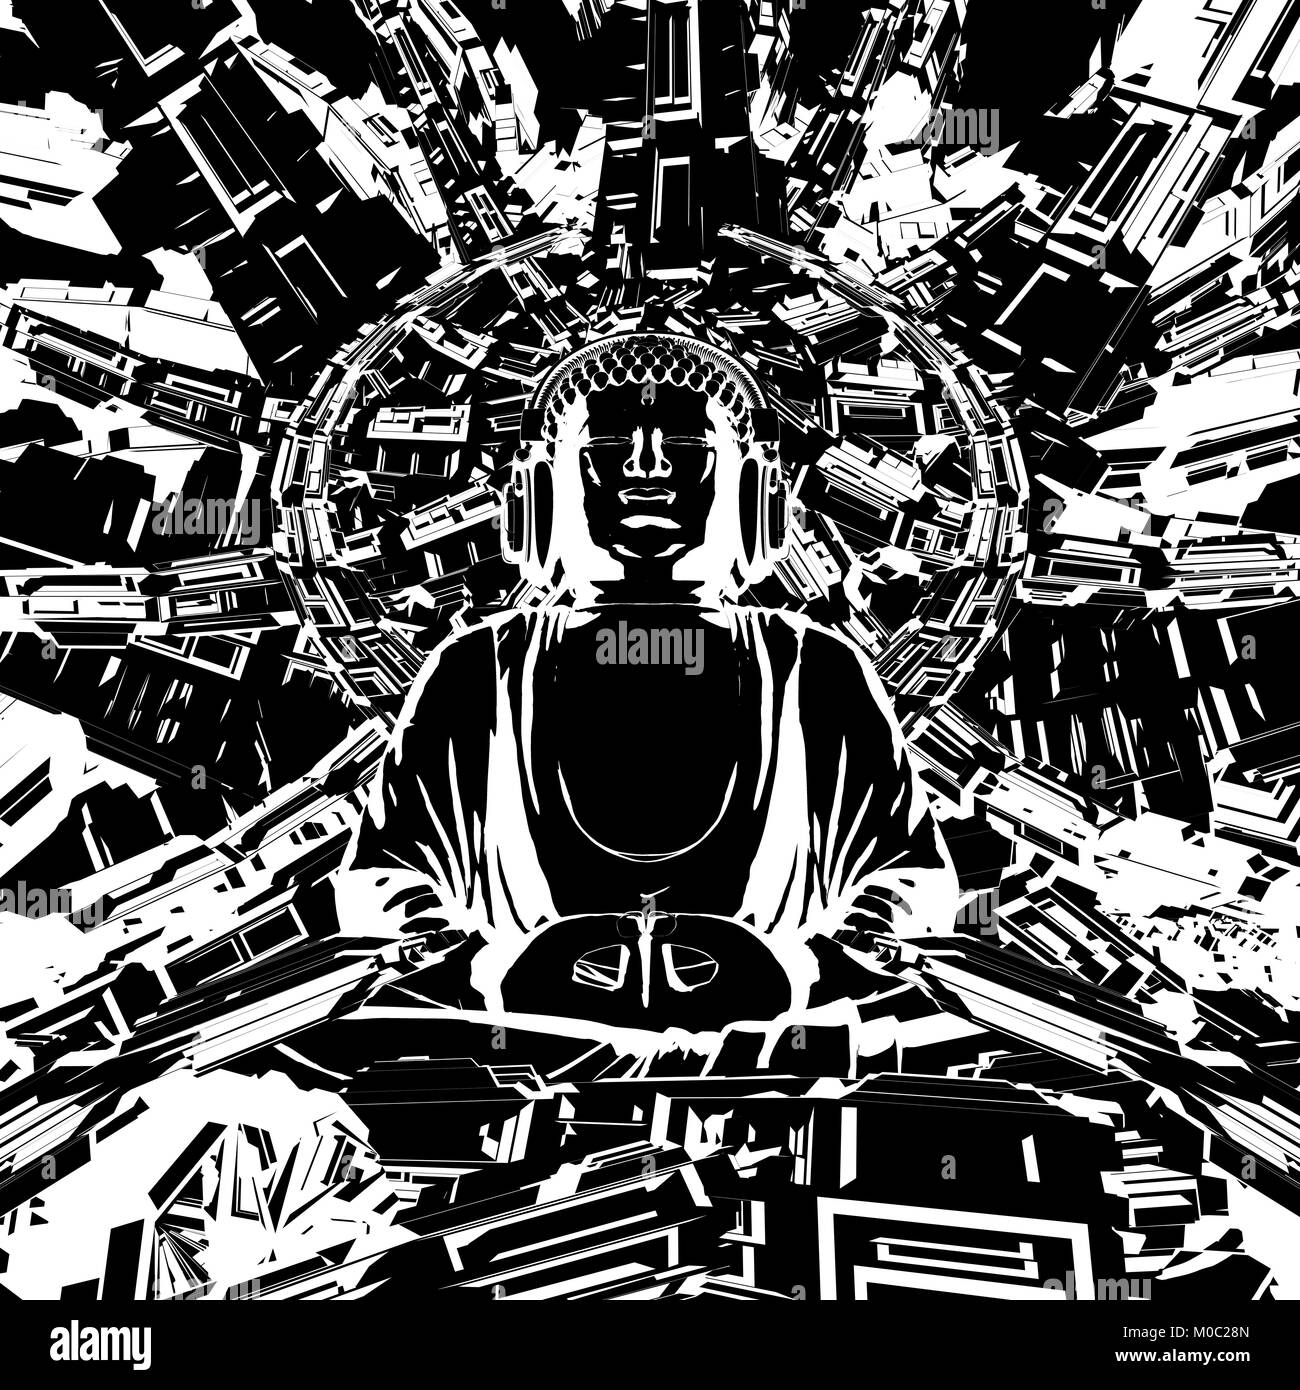 Technical Buddha concept / 3D illustration of cartoon style meditating Buddha wearing headphones inside futuristic reactor Stock Photo